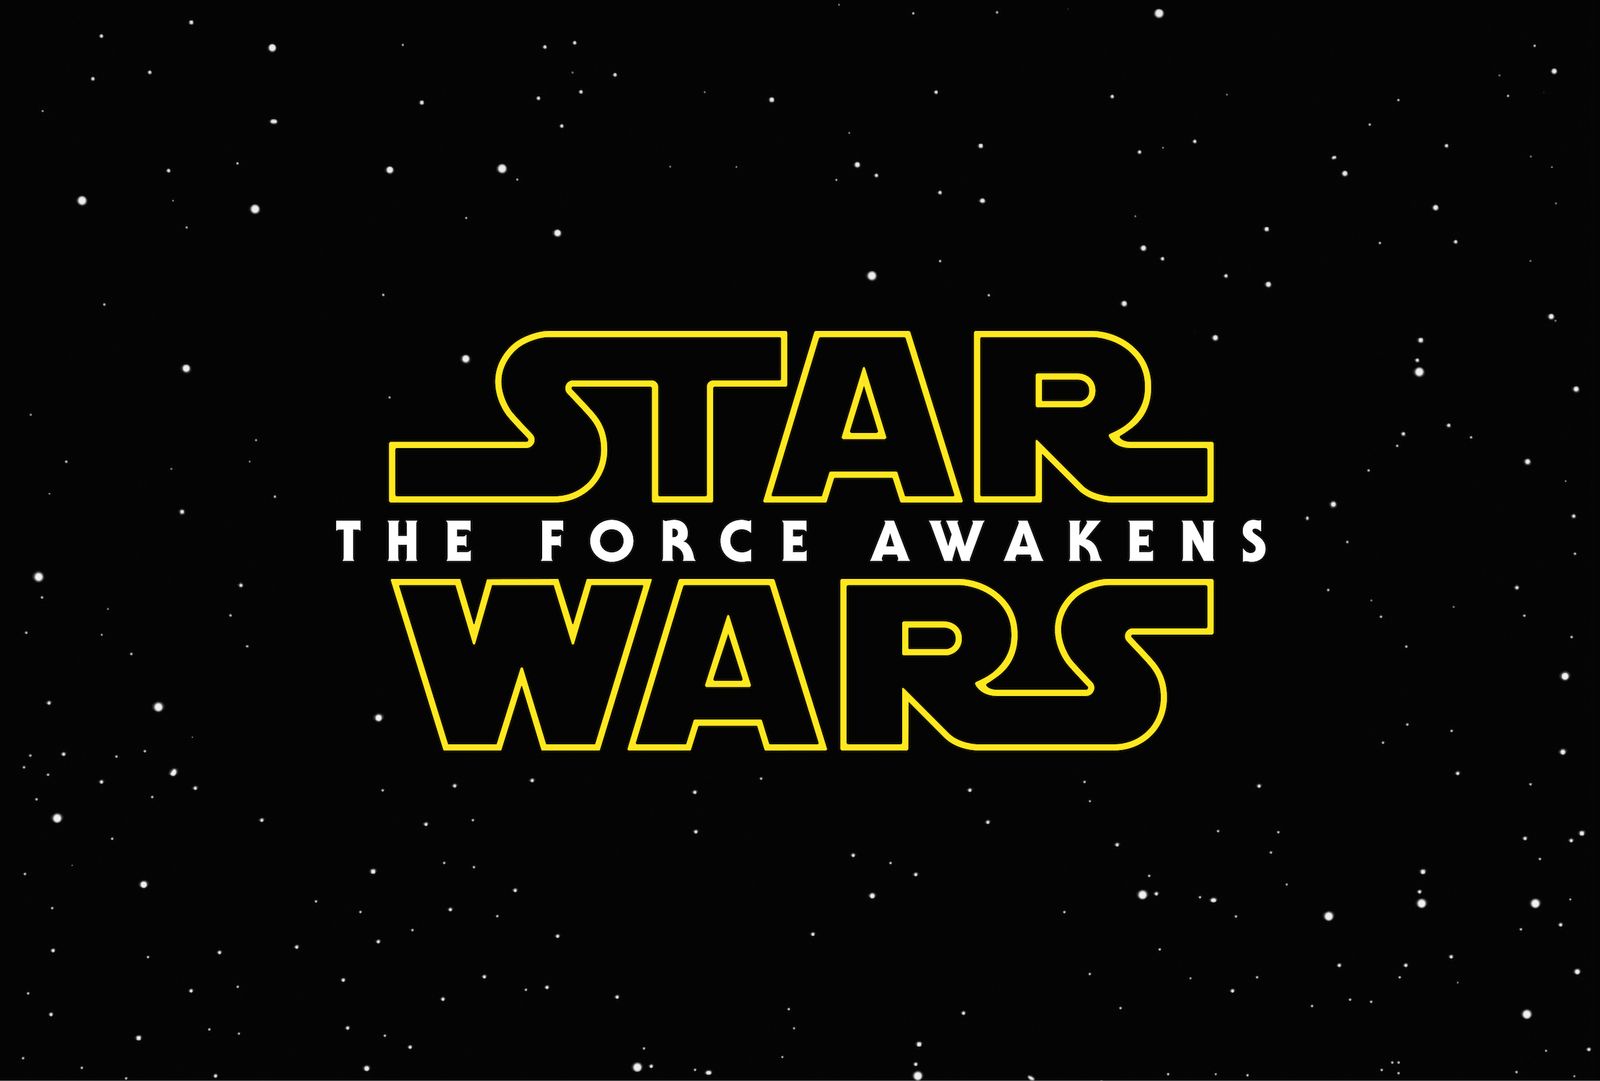 Star Wars VII Crosses the Billion-dollar Mark